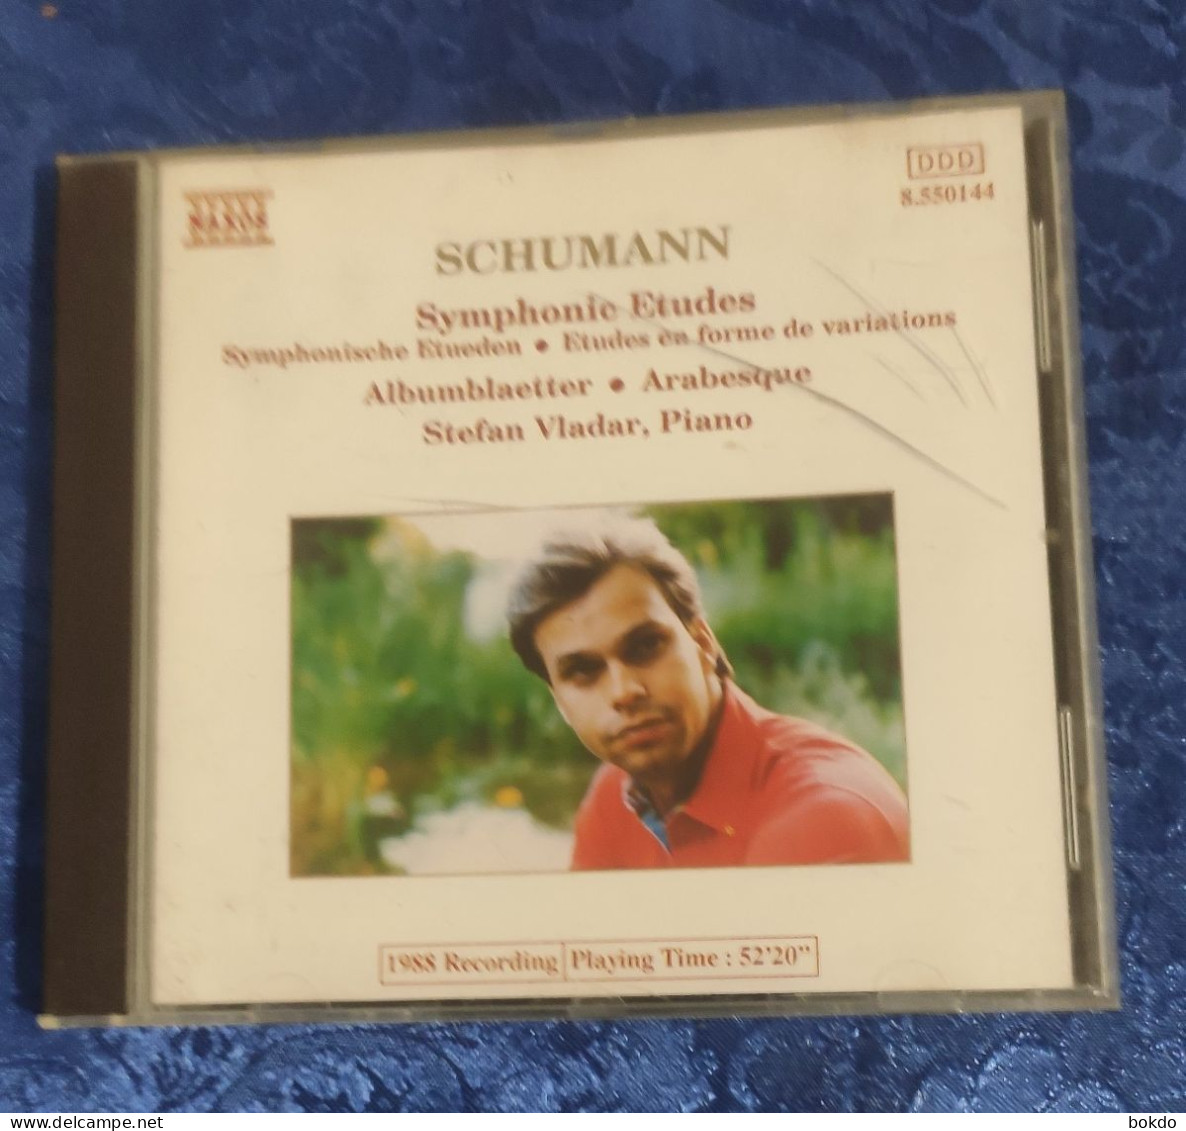 Schumann - Symphonie Etudes - Clásica